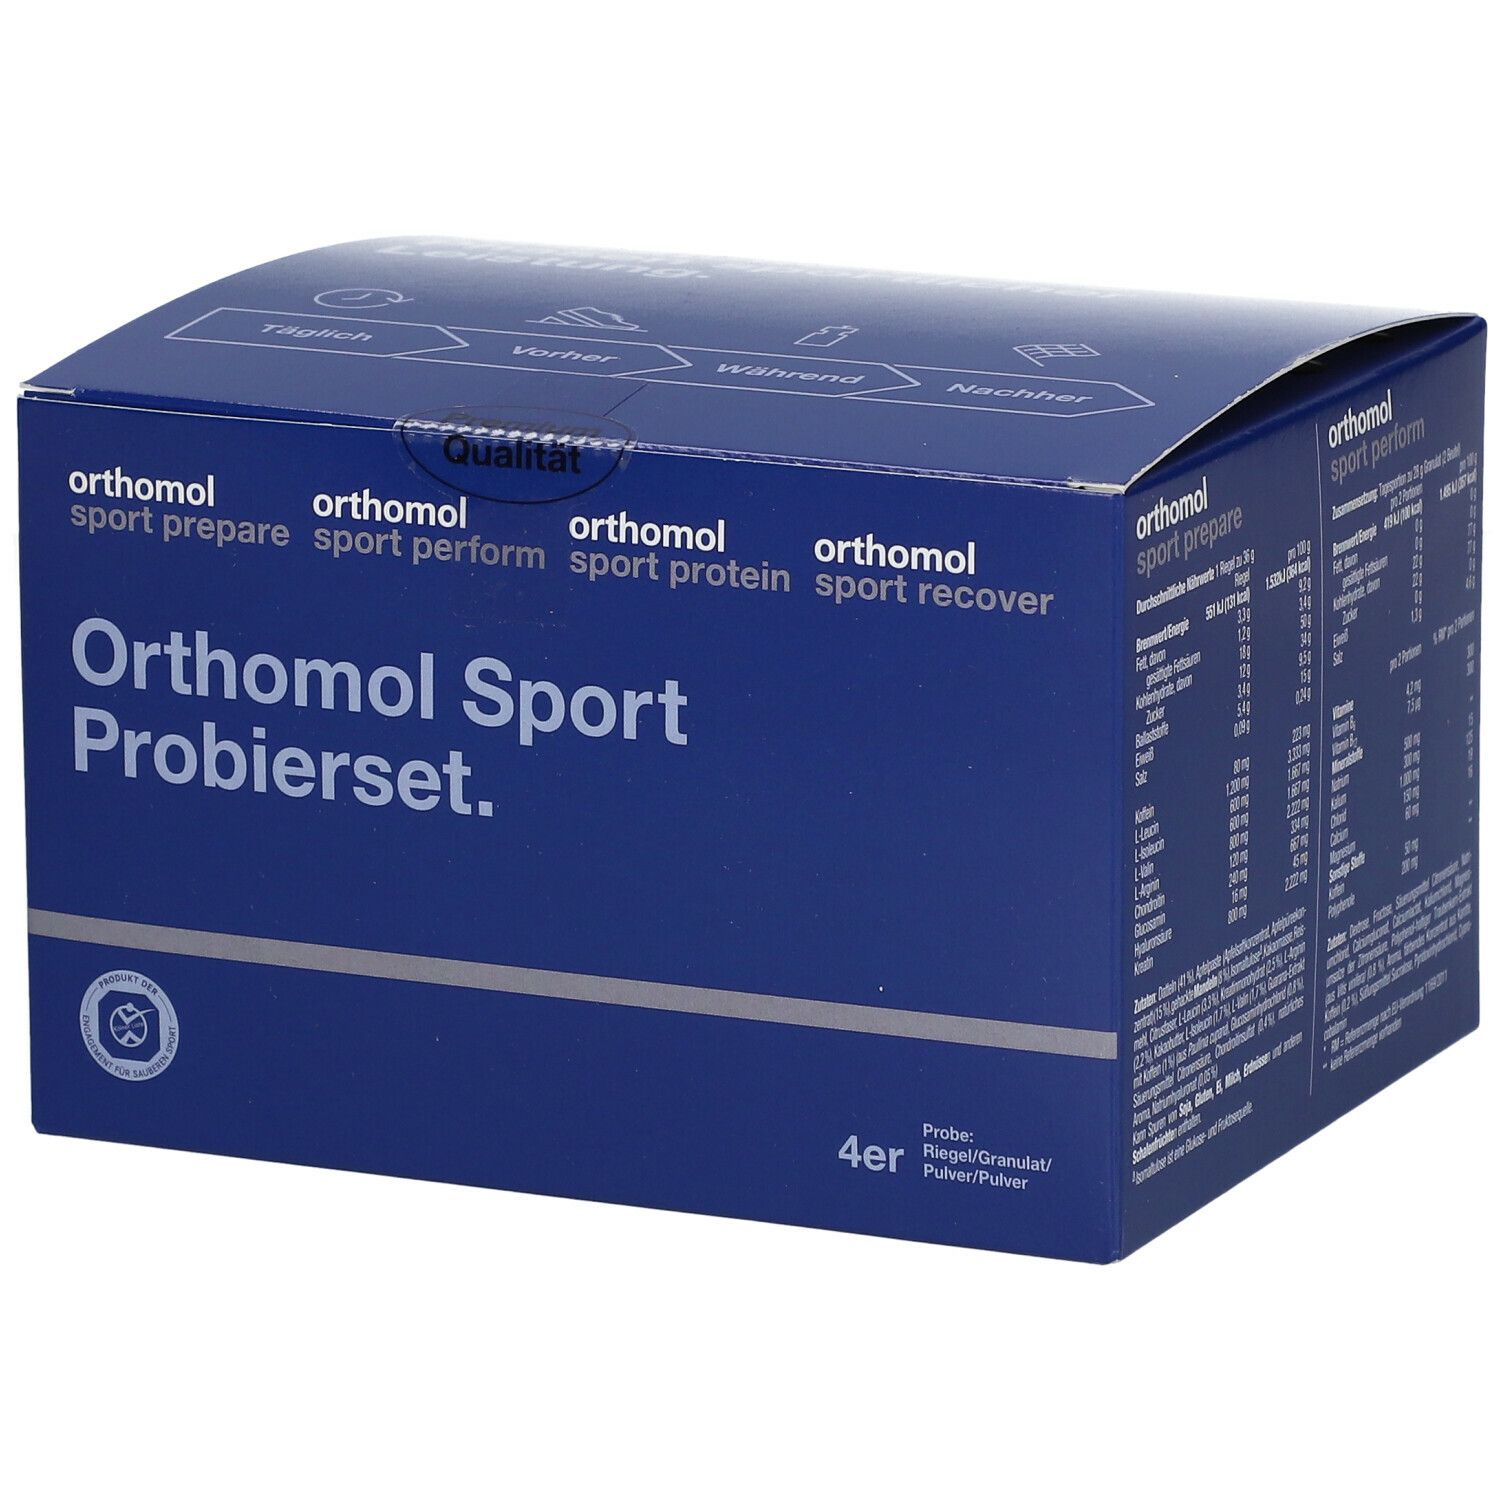 Orthomol Sport Probierpaket